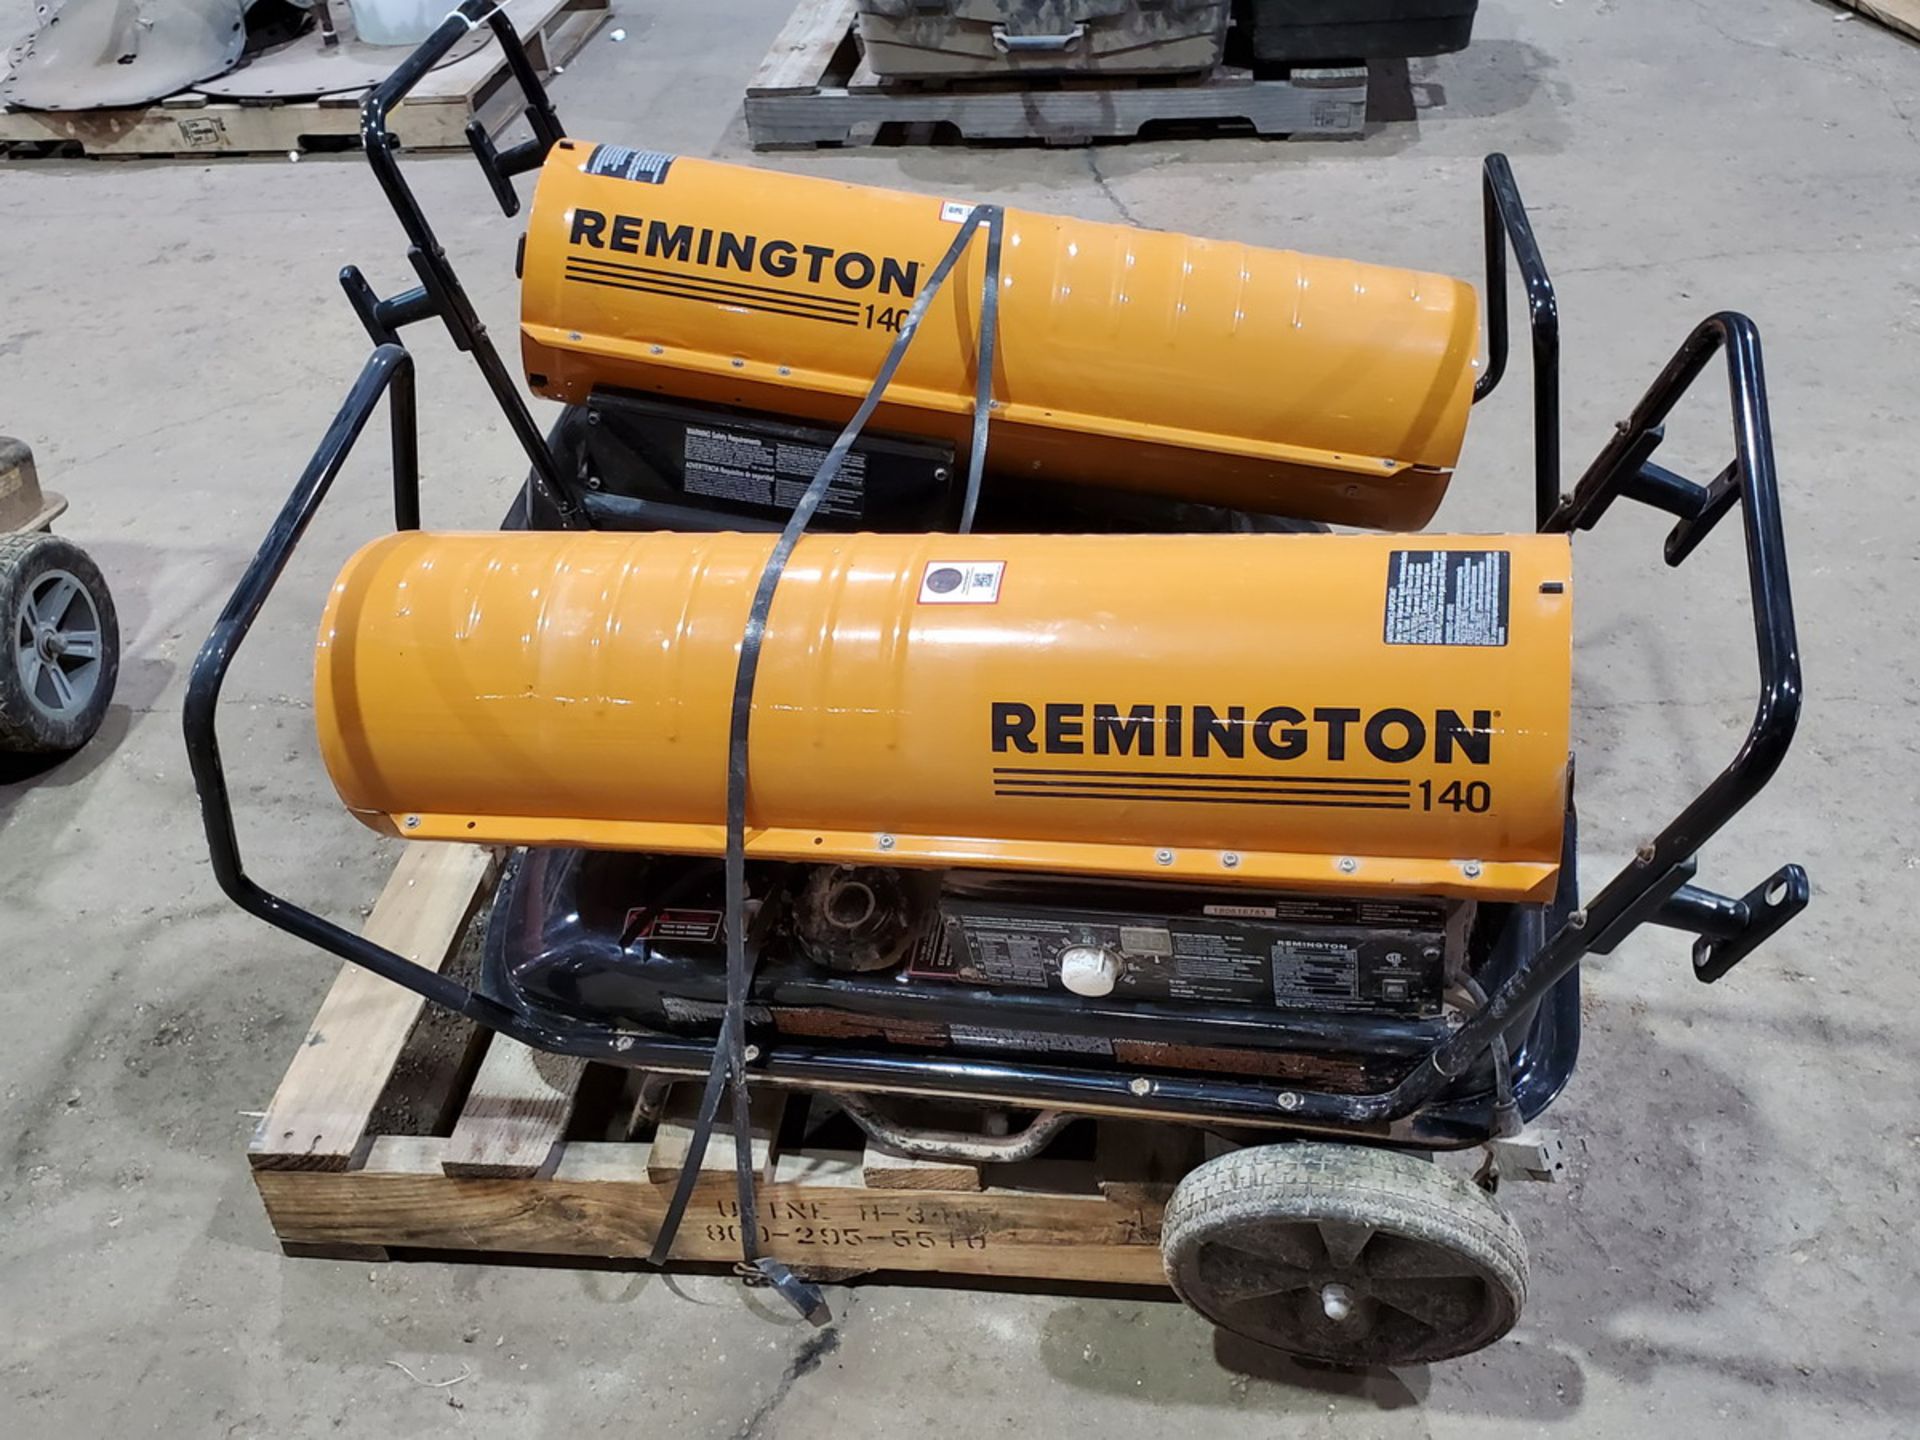 Remington 140 (2) Portable Kerosene Heaters 140,000 BTU, 1PH - Image 3 of 4